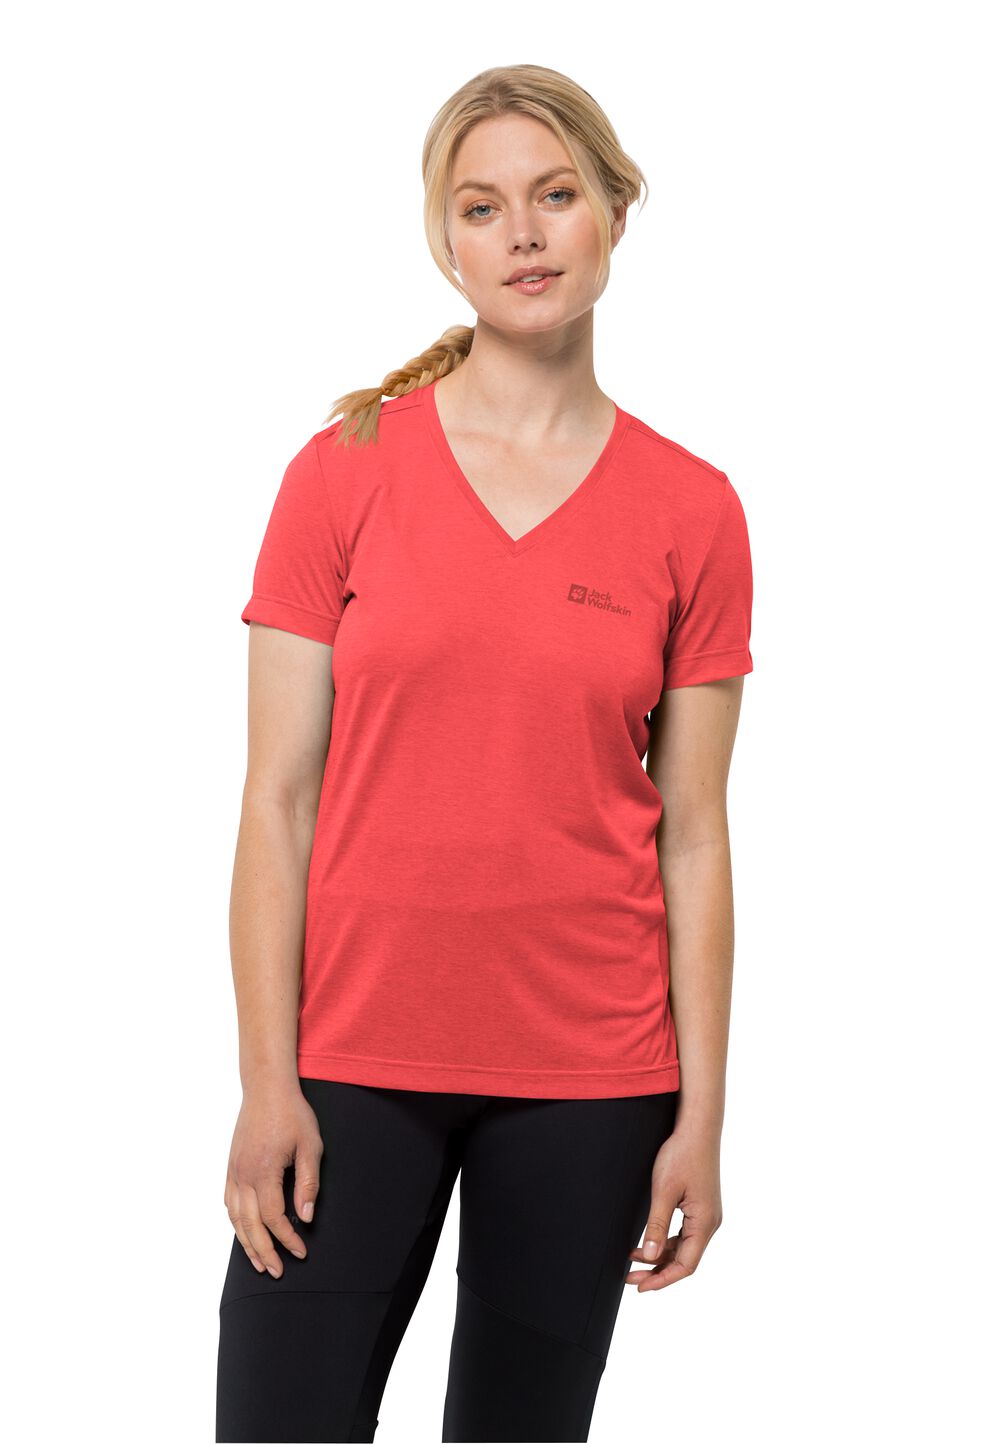 Jack Wolfskin Crosstrail T-Shirt Women Functioneel shirt Dames XL rood vibrant red